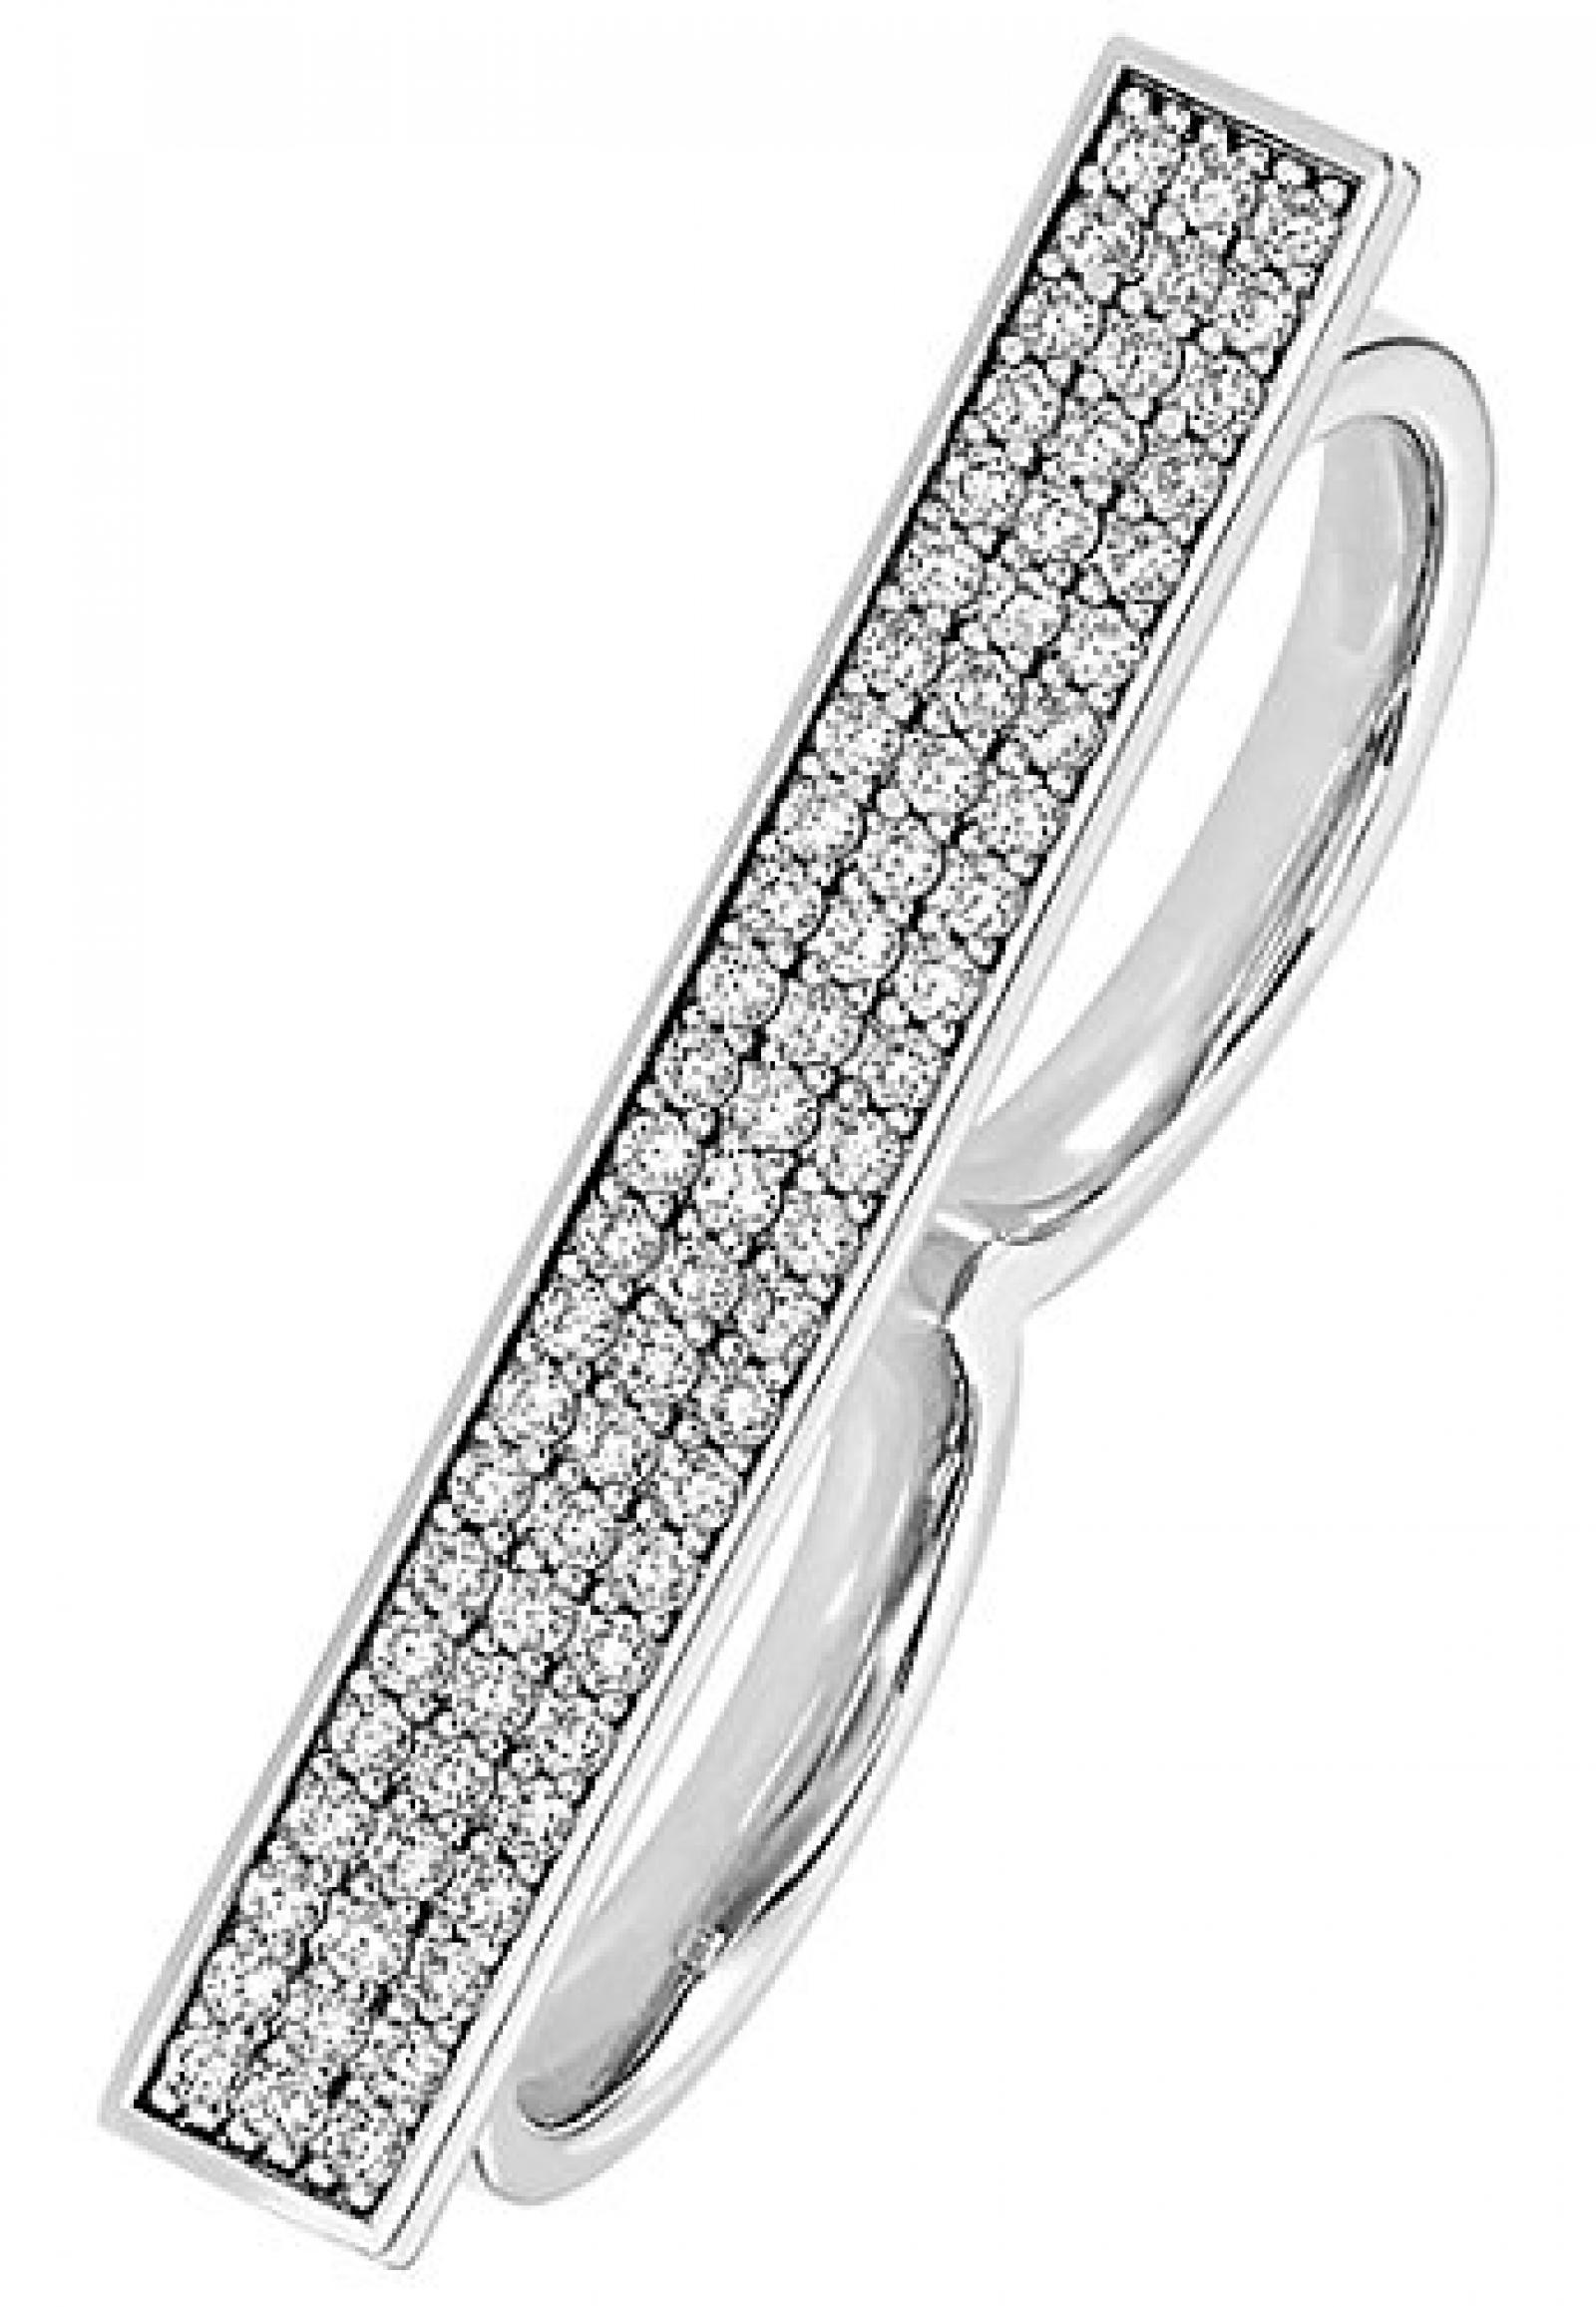 JETTE Silver Damen-Ring 925er Silber rhodiniert Zirkonia (silber) 